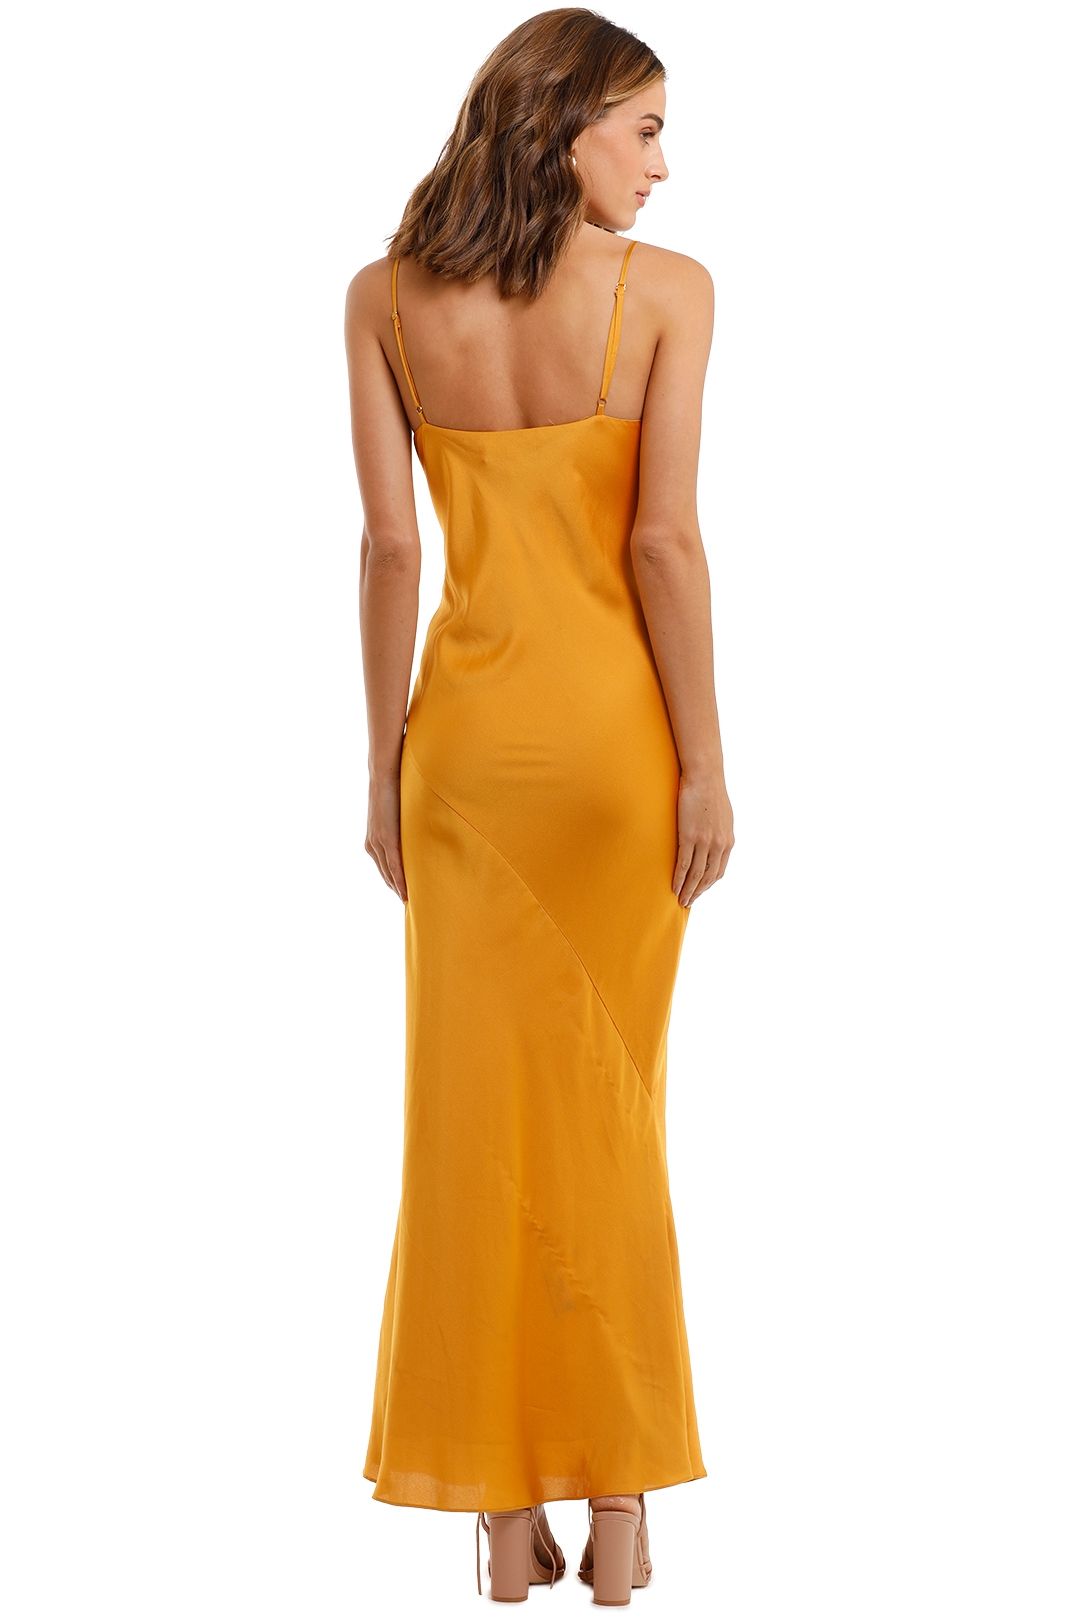 Shona Joy Bias Cowl Maxi Dress Saffron